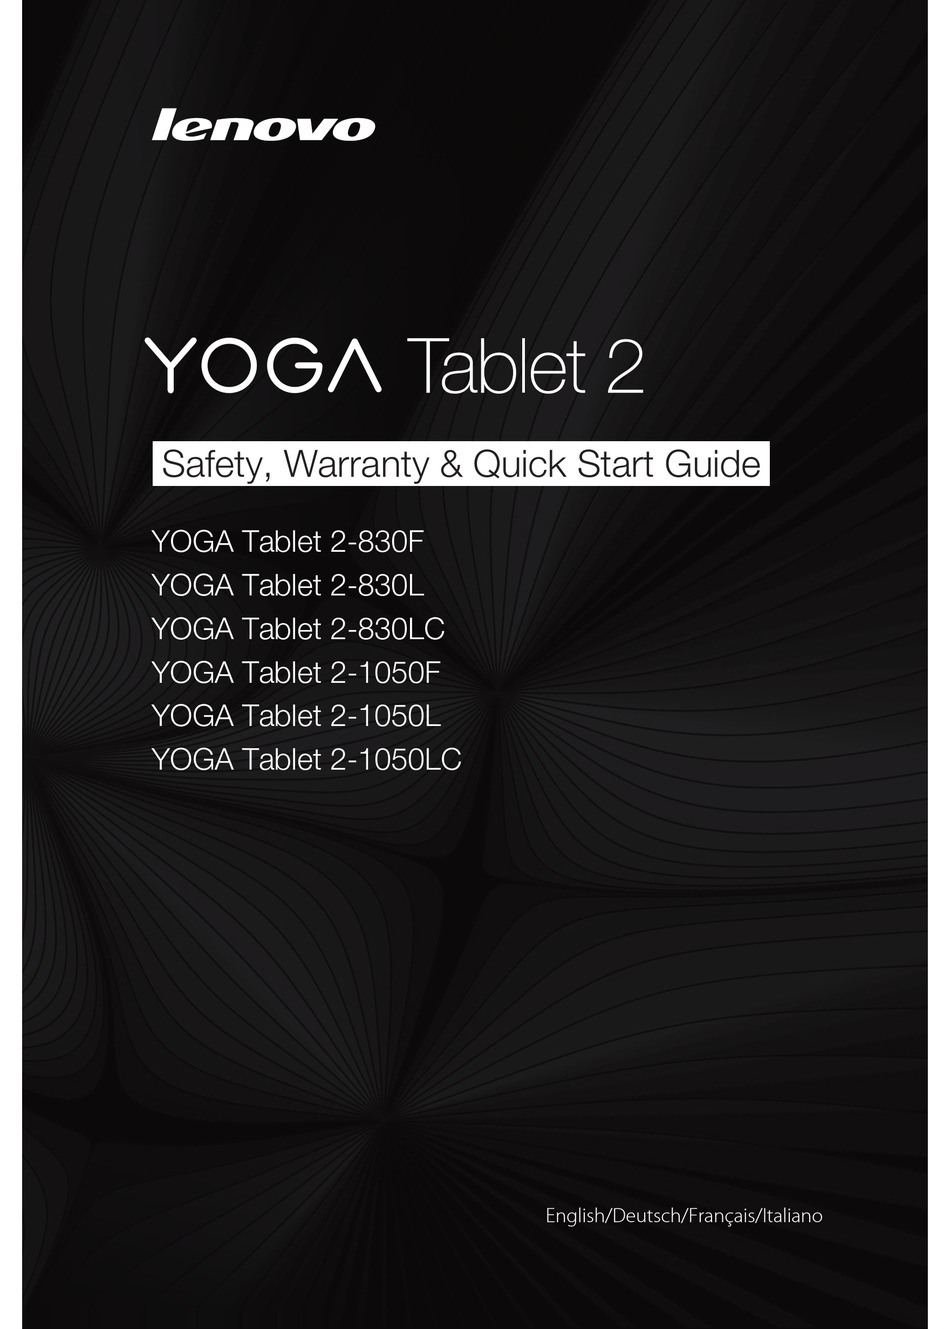 Lenovo Yoga Tablet 2 0lc Safety Warranty Quick Start Manual Pdf Download Manualslib